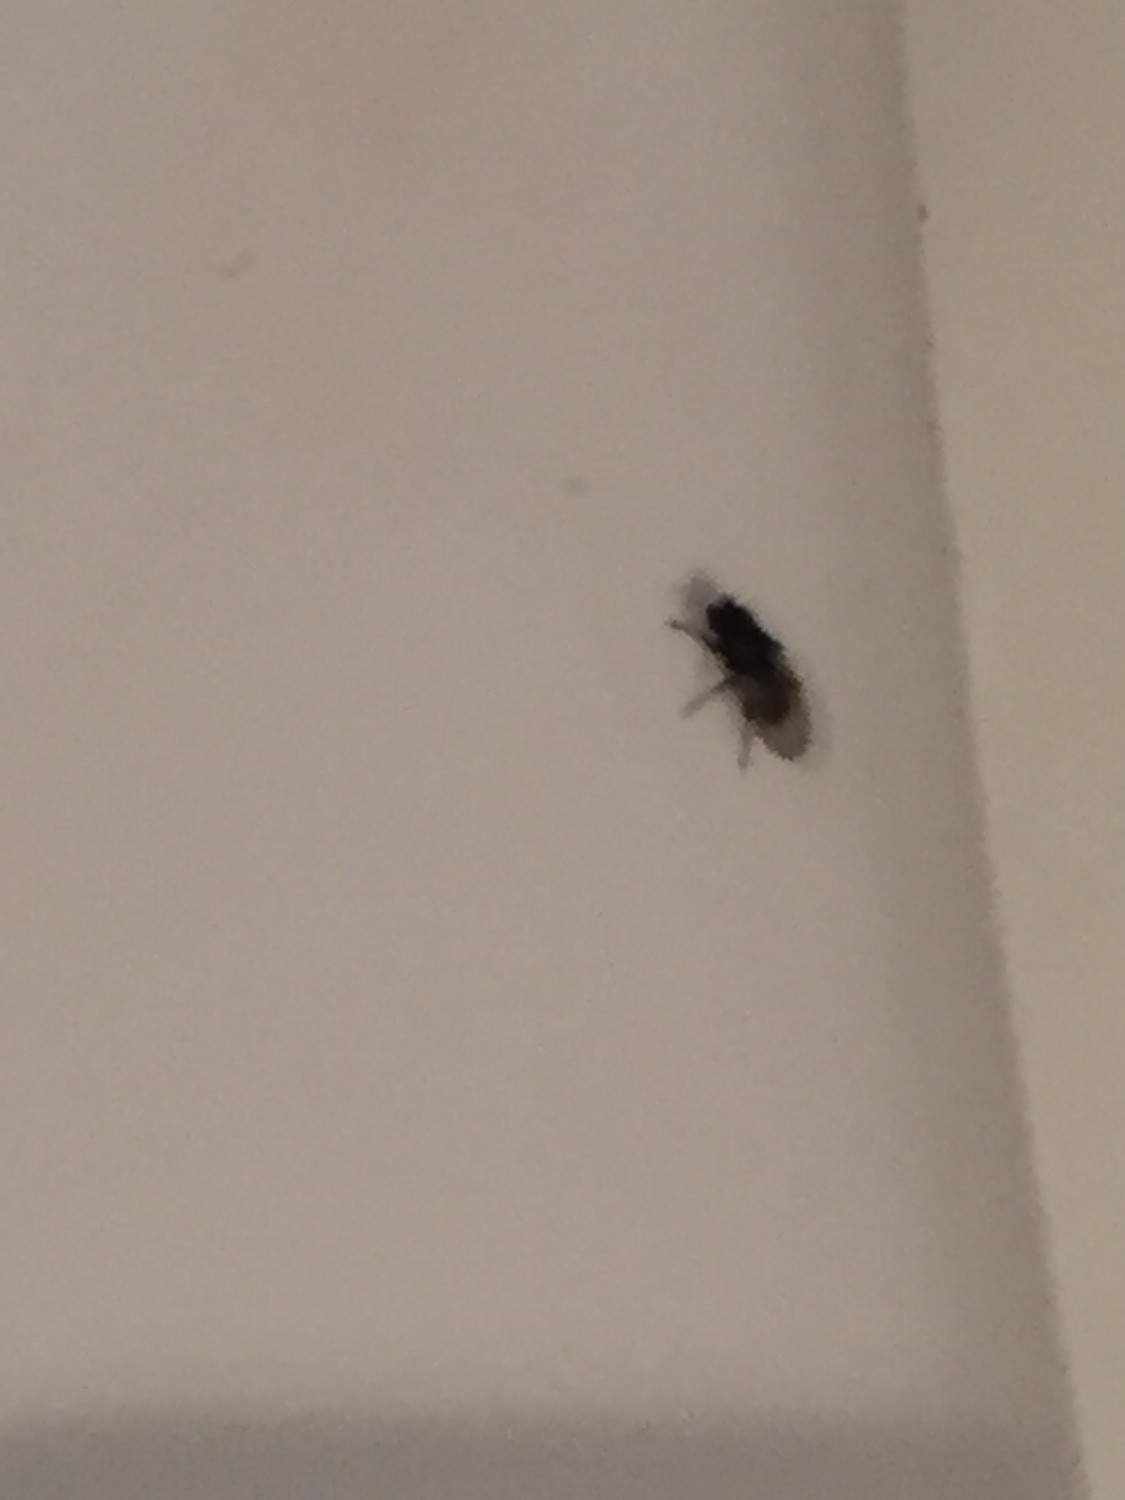 Small Flying Bugs In Bathroom
 21 Fancy Small Flying Bugs In Bathroom Home Family